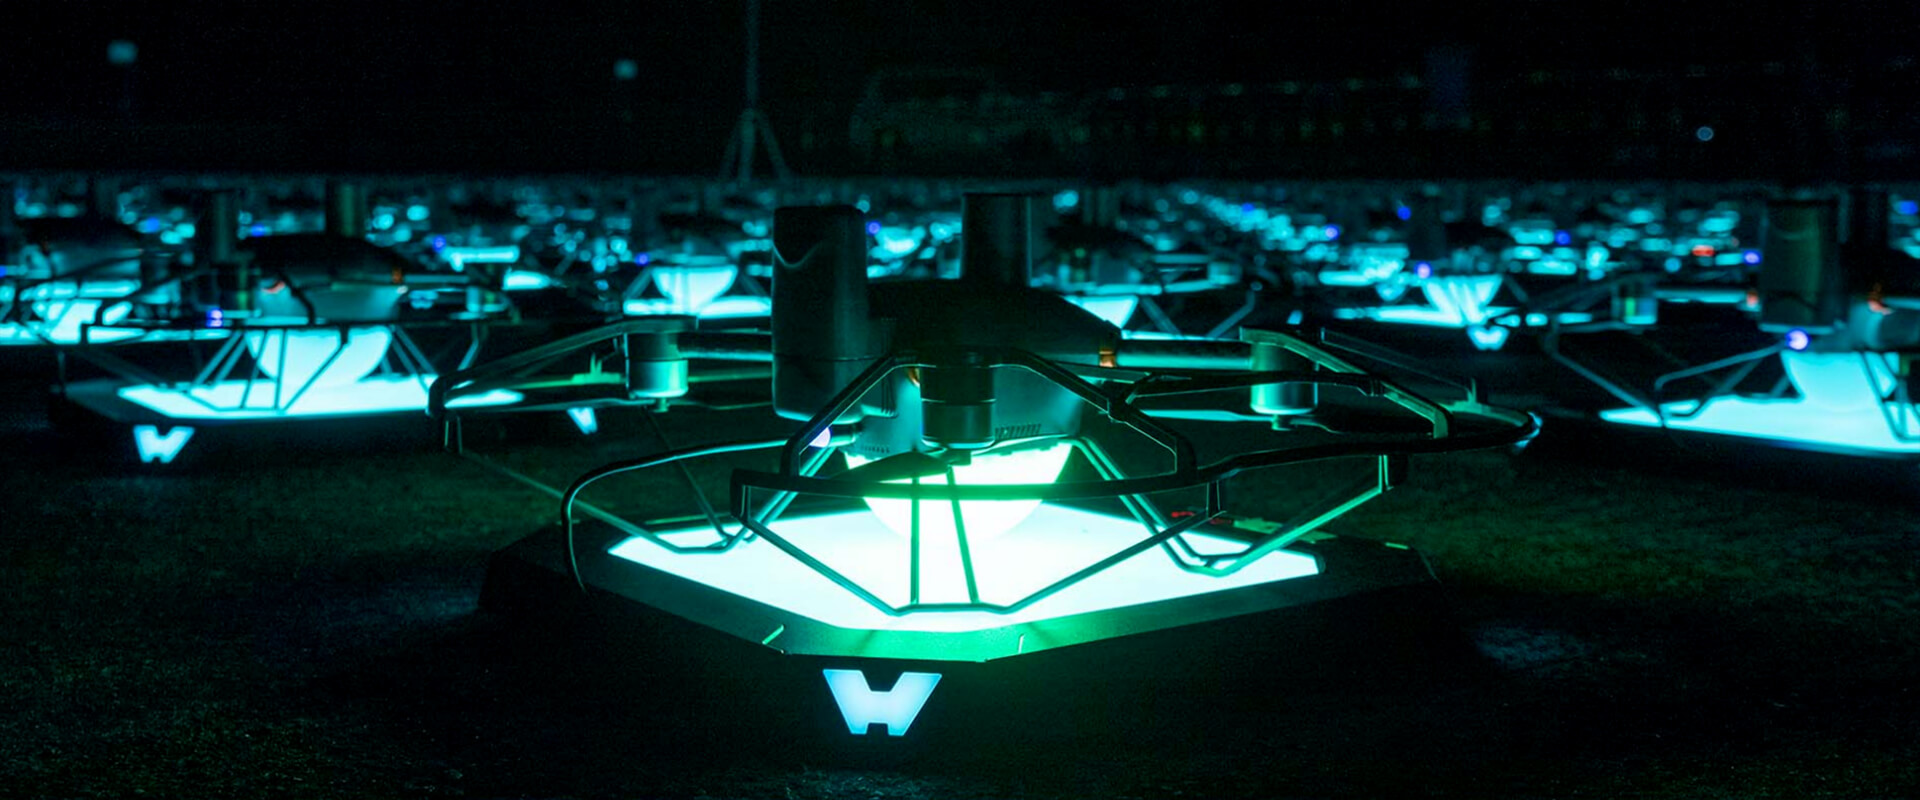 EMO drone take-off platform